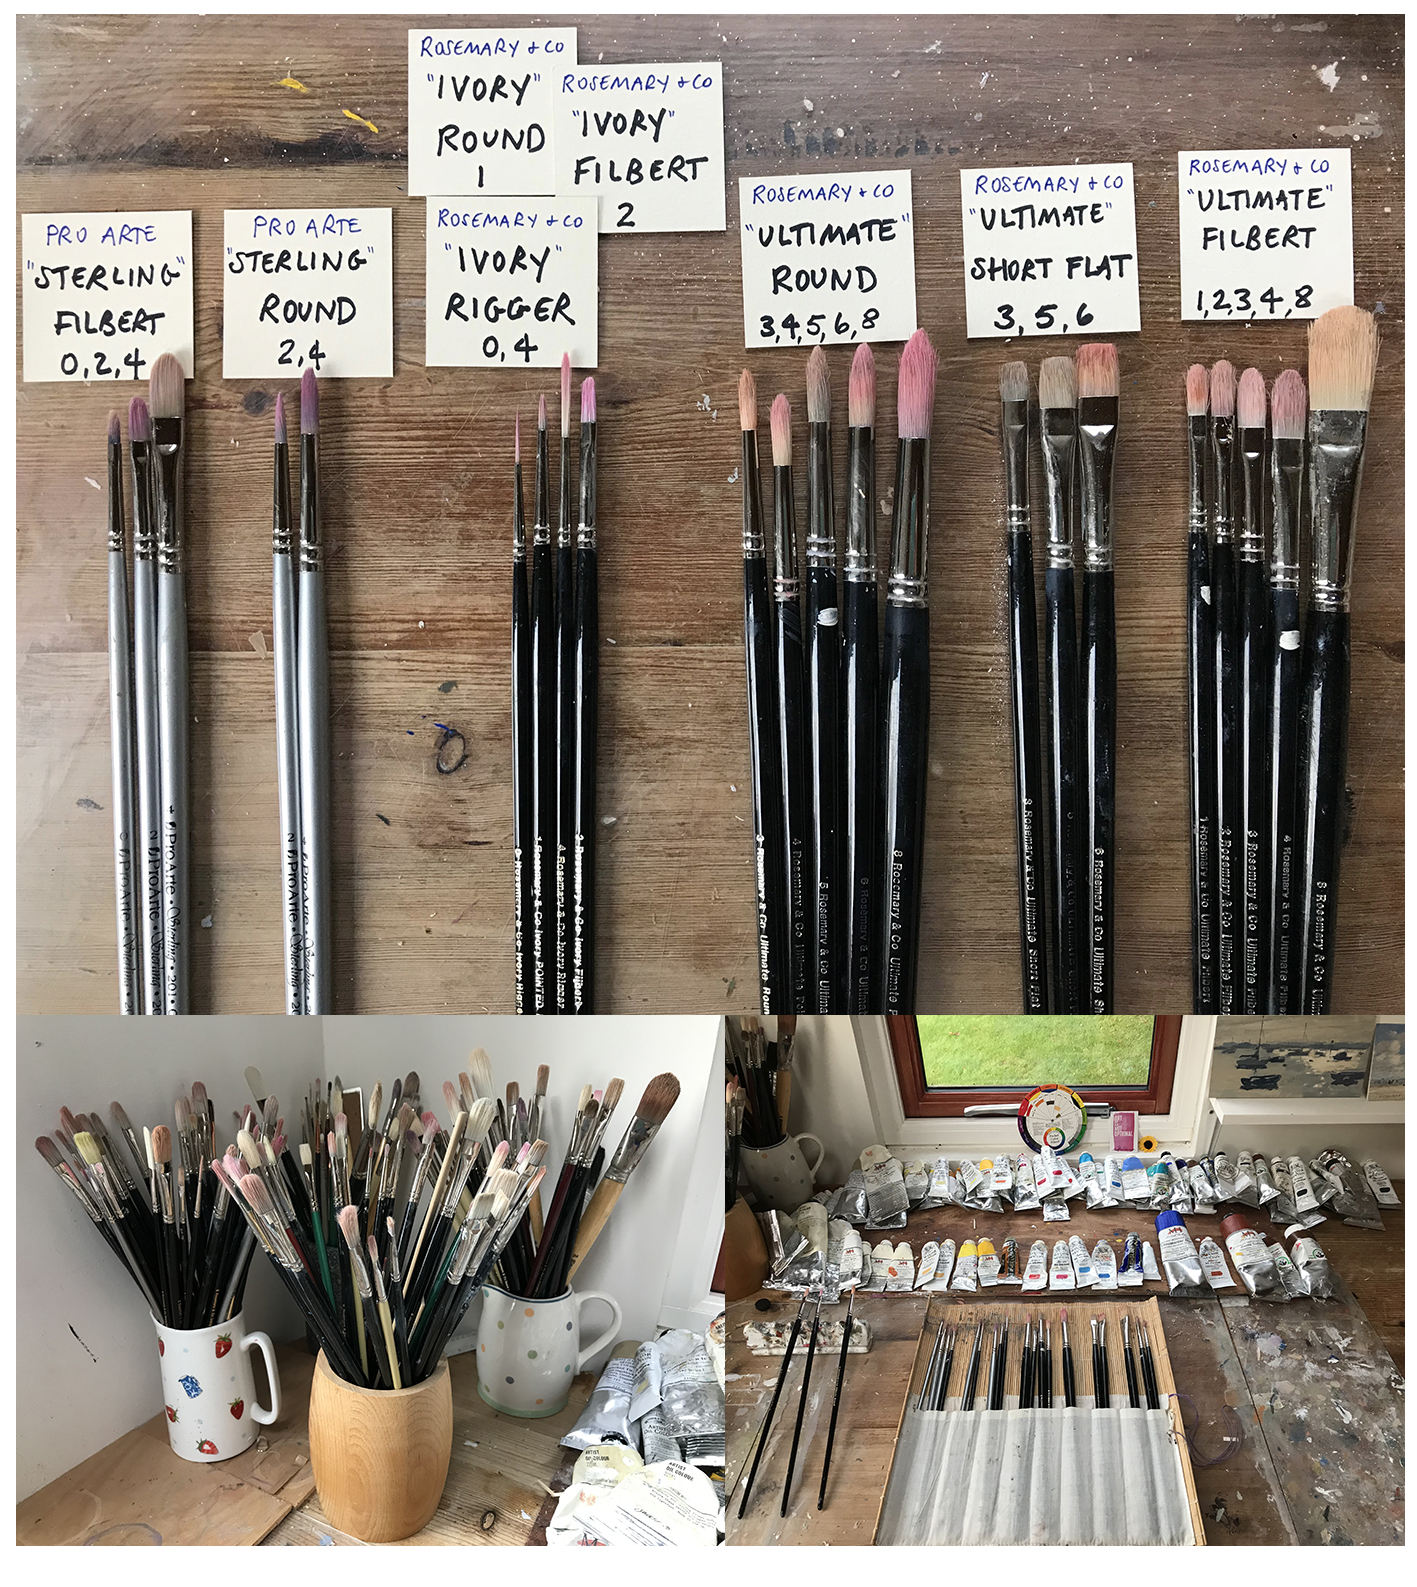 Equipment #2 Oil Paint Brushes - Clare Bowen